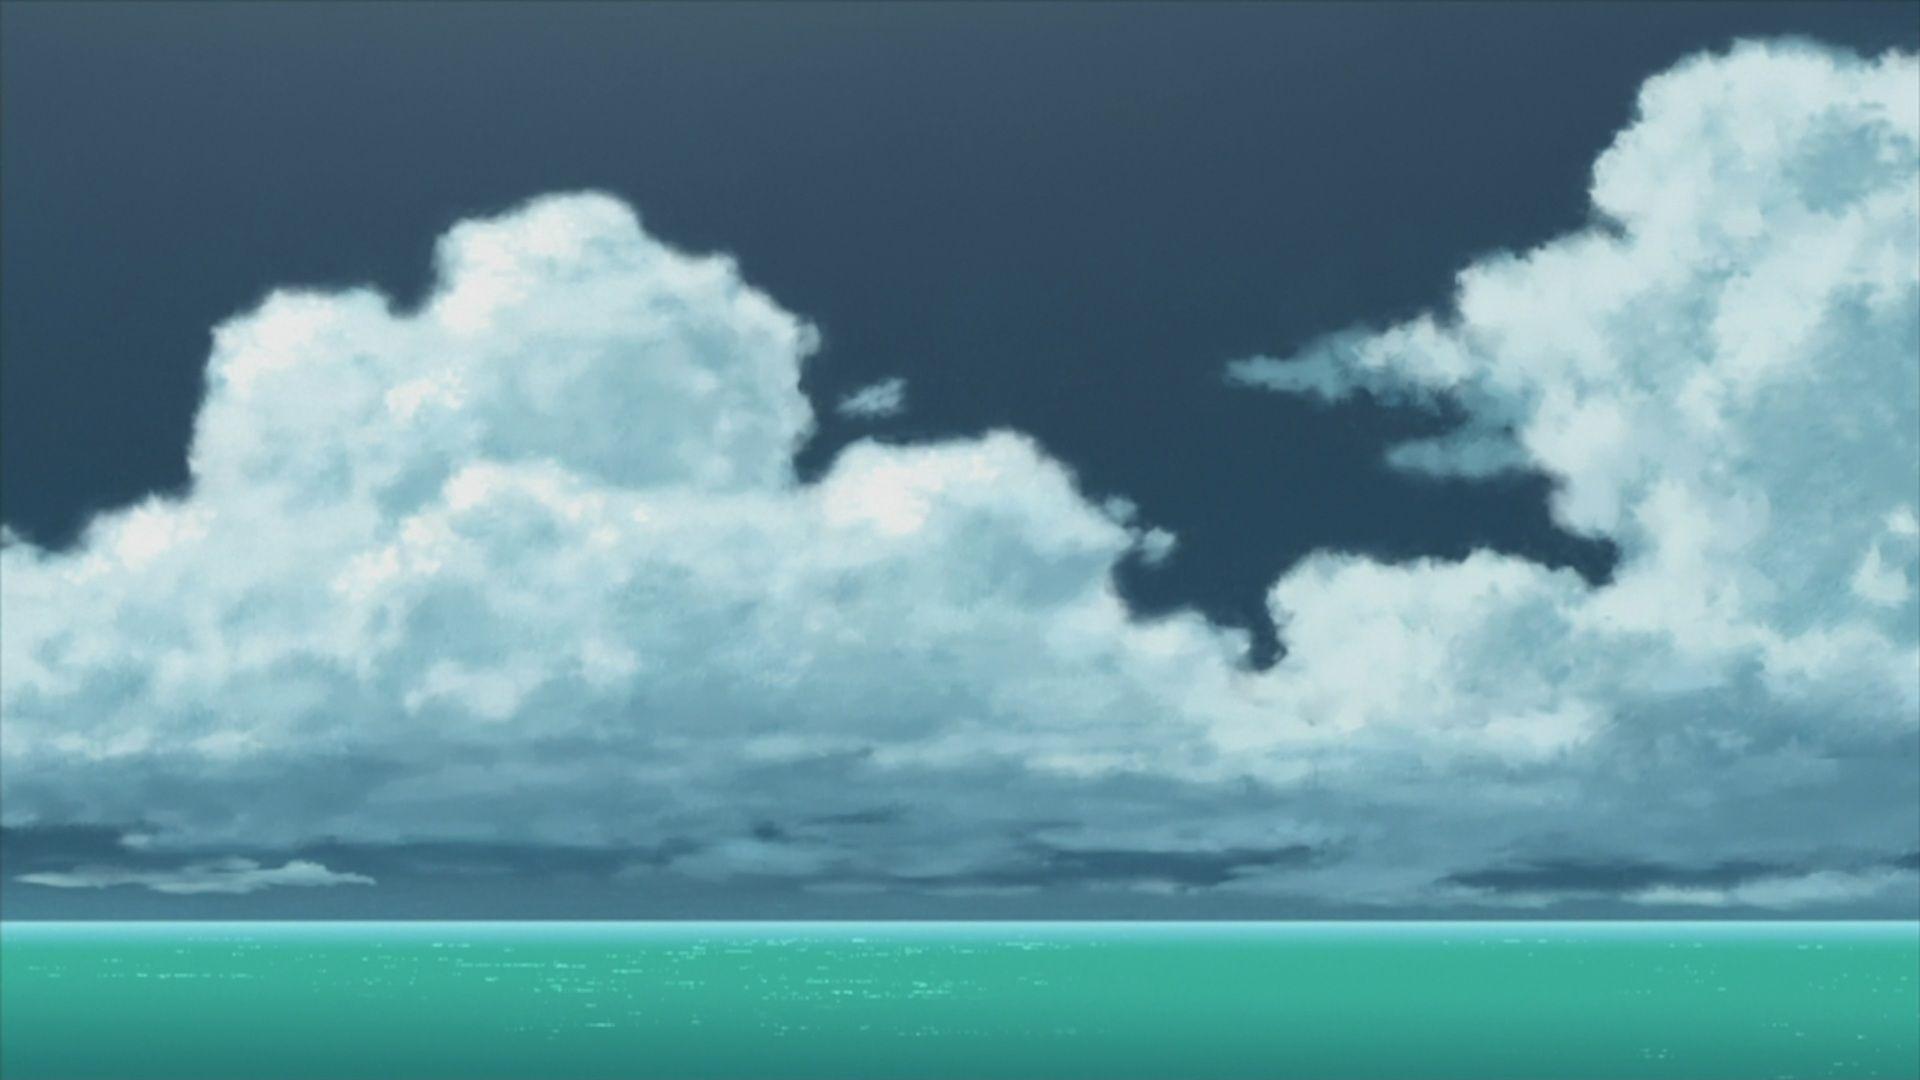 One Piece Landscape Wallpapers - Top Free One Piece Landscape